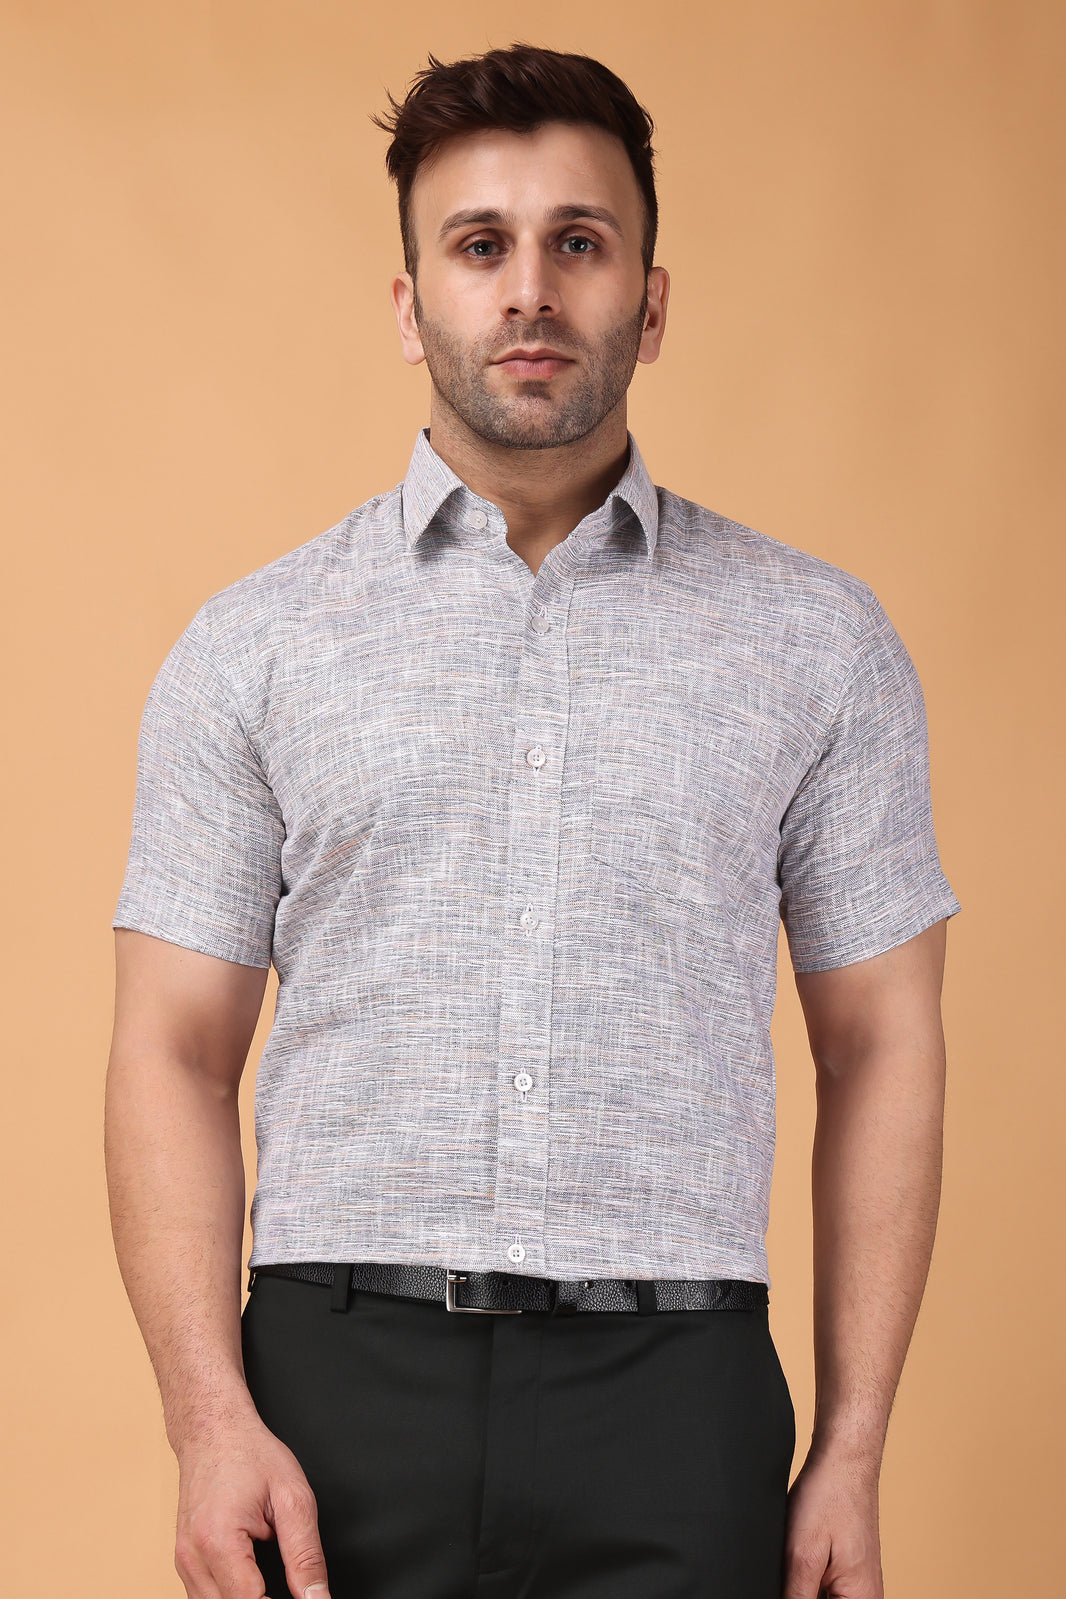 Buy Plus Size Men's Shirt & Men Plus Size Shirts Online - Apella